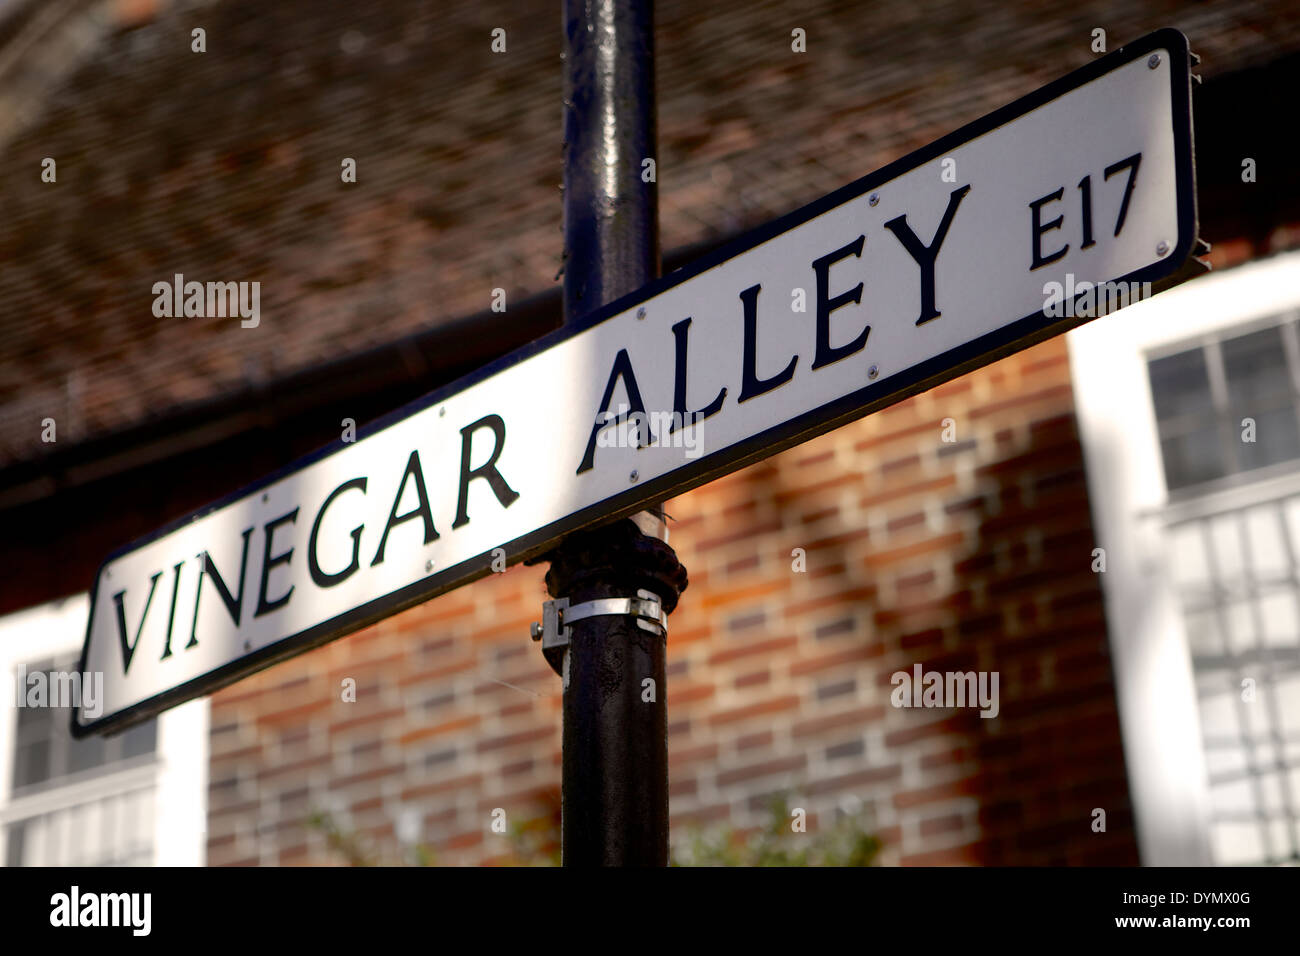 Vinegar alley Walthamstow Stock Photo